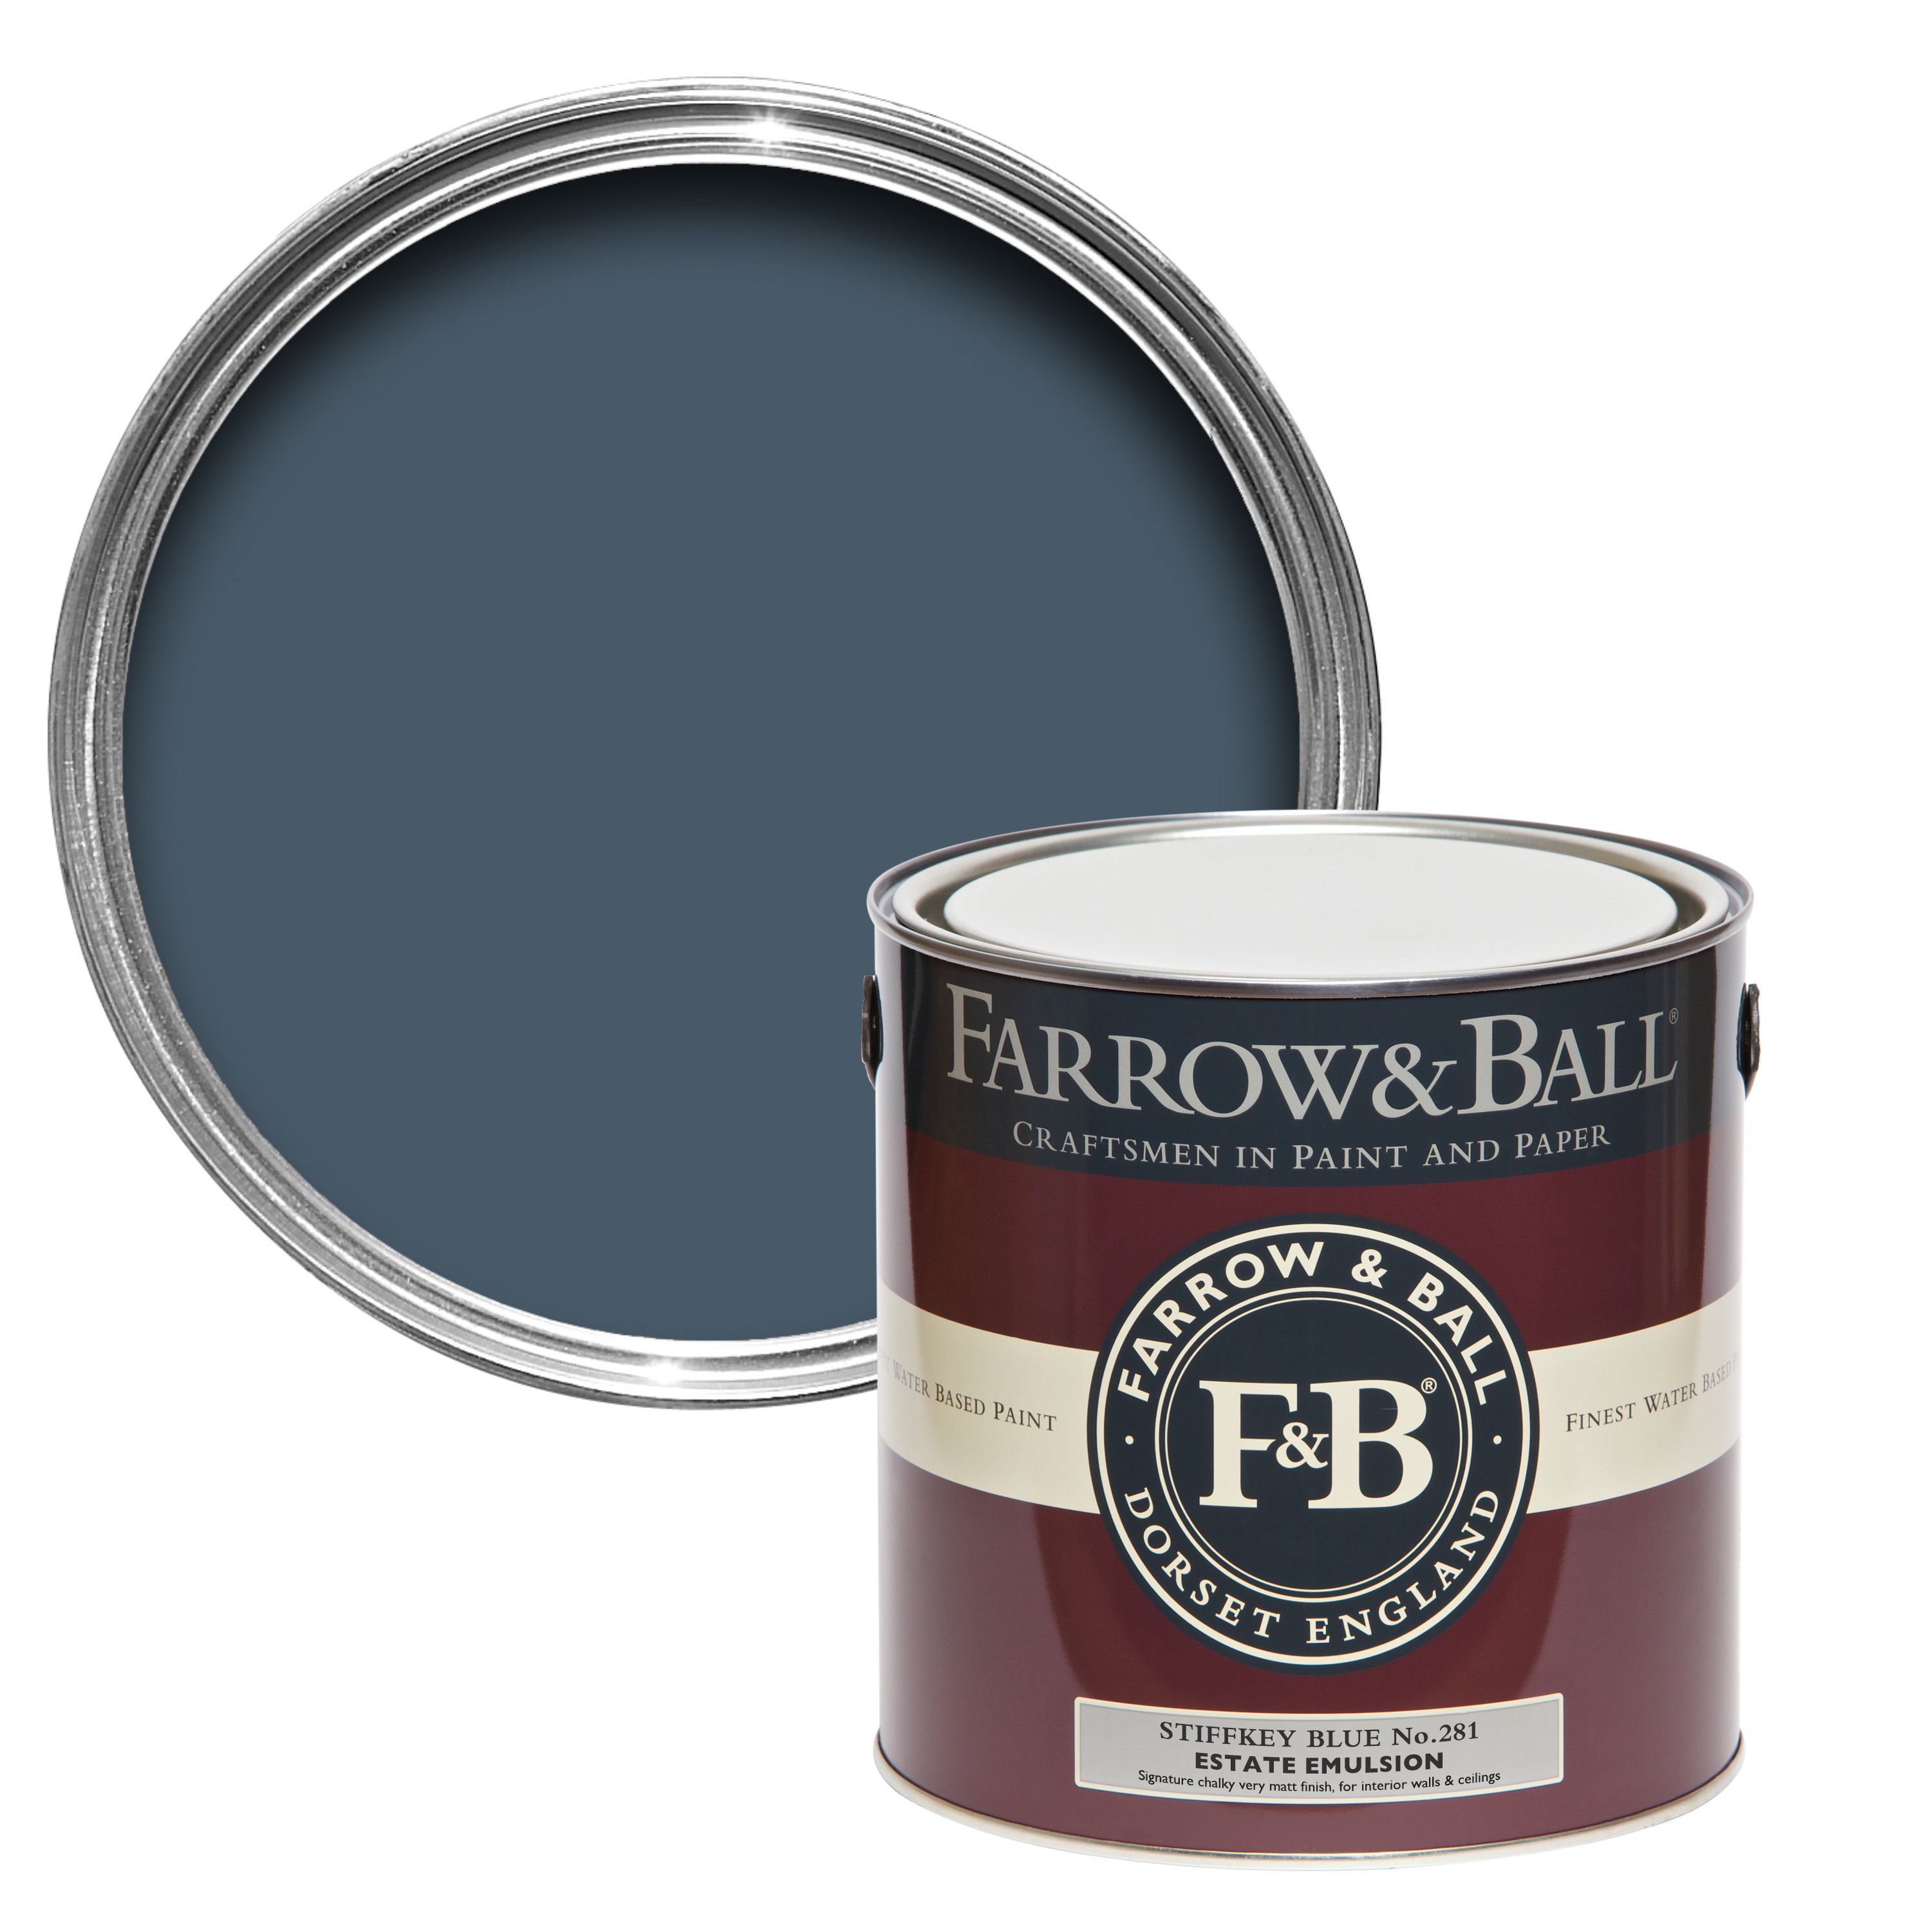 Farrow & Ball Estate Stiffkey blue No.281 Matt Emulsion paint, 2.5L Tester pot